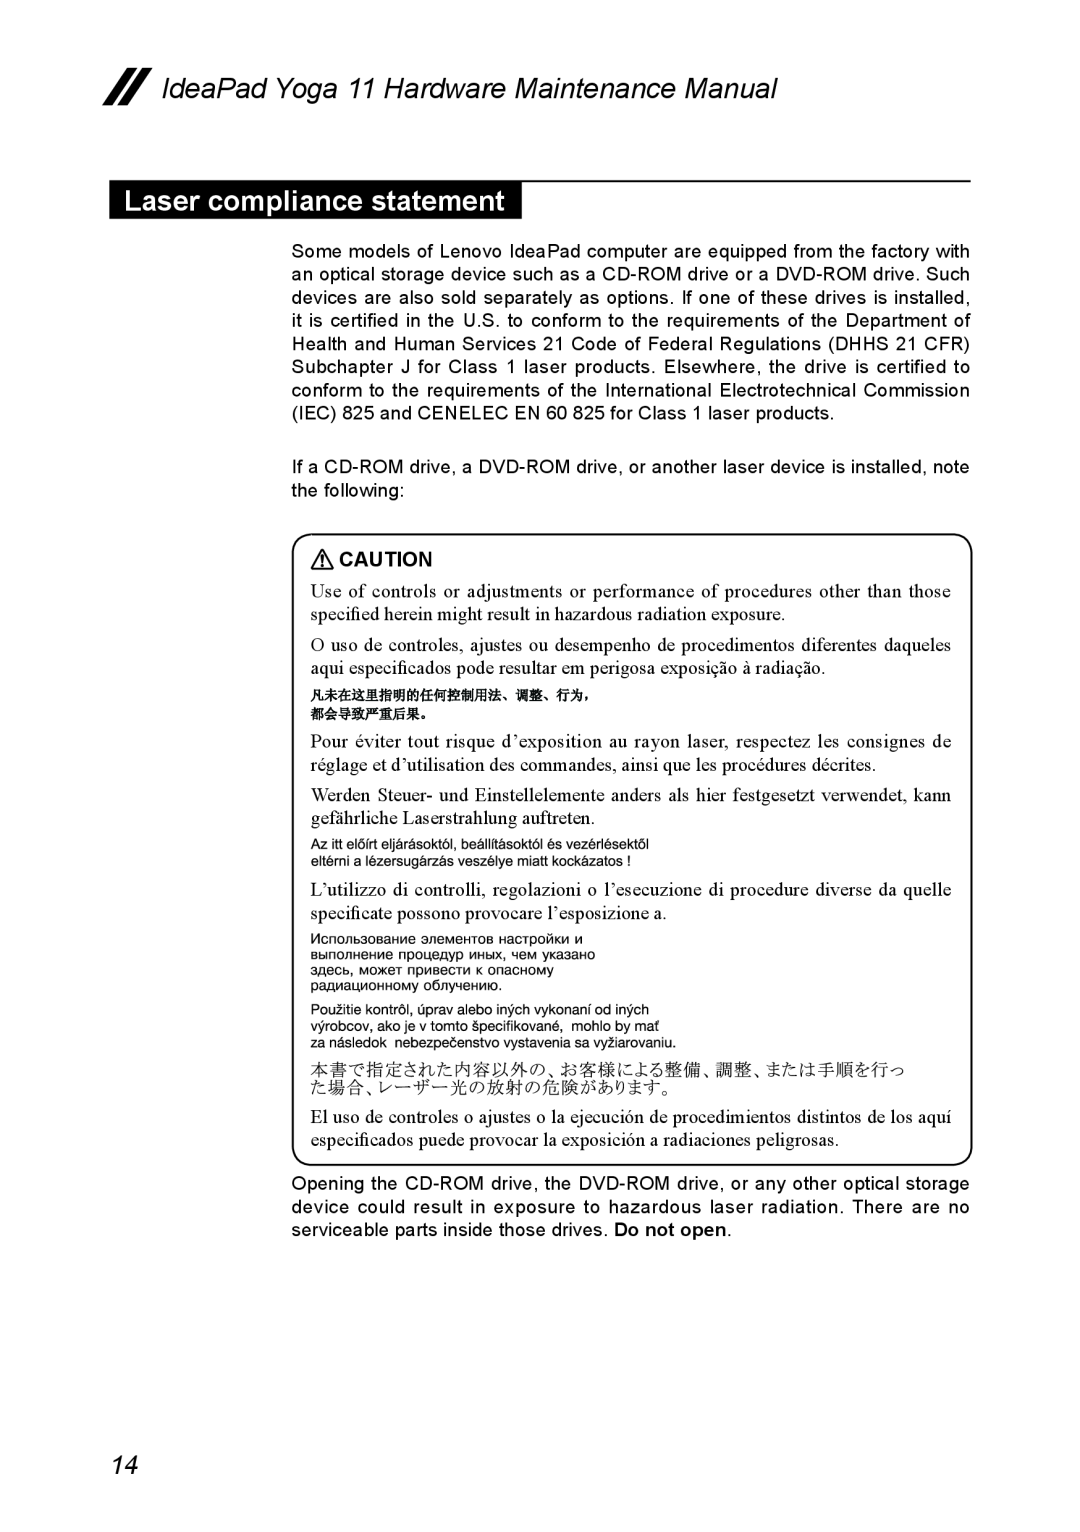 Lenovo manual Laser compliance statement, IdeaPad Yoga 11 Hardware Maintenance Manual 